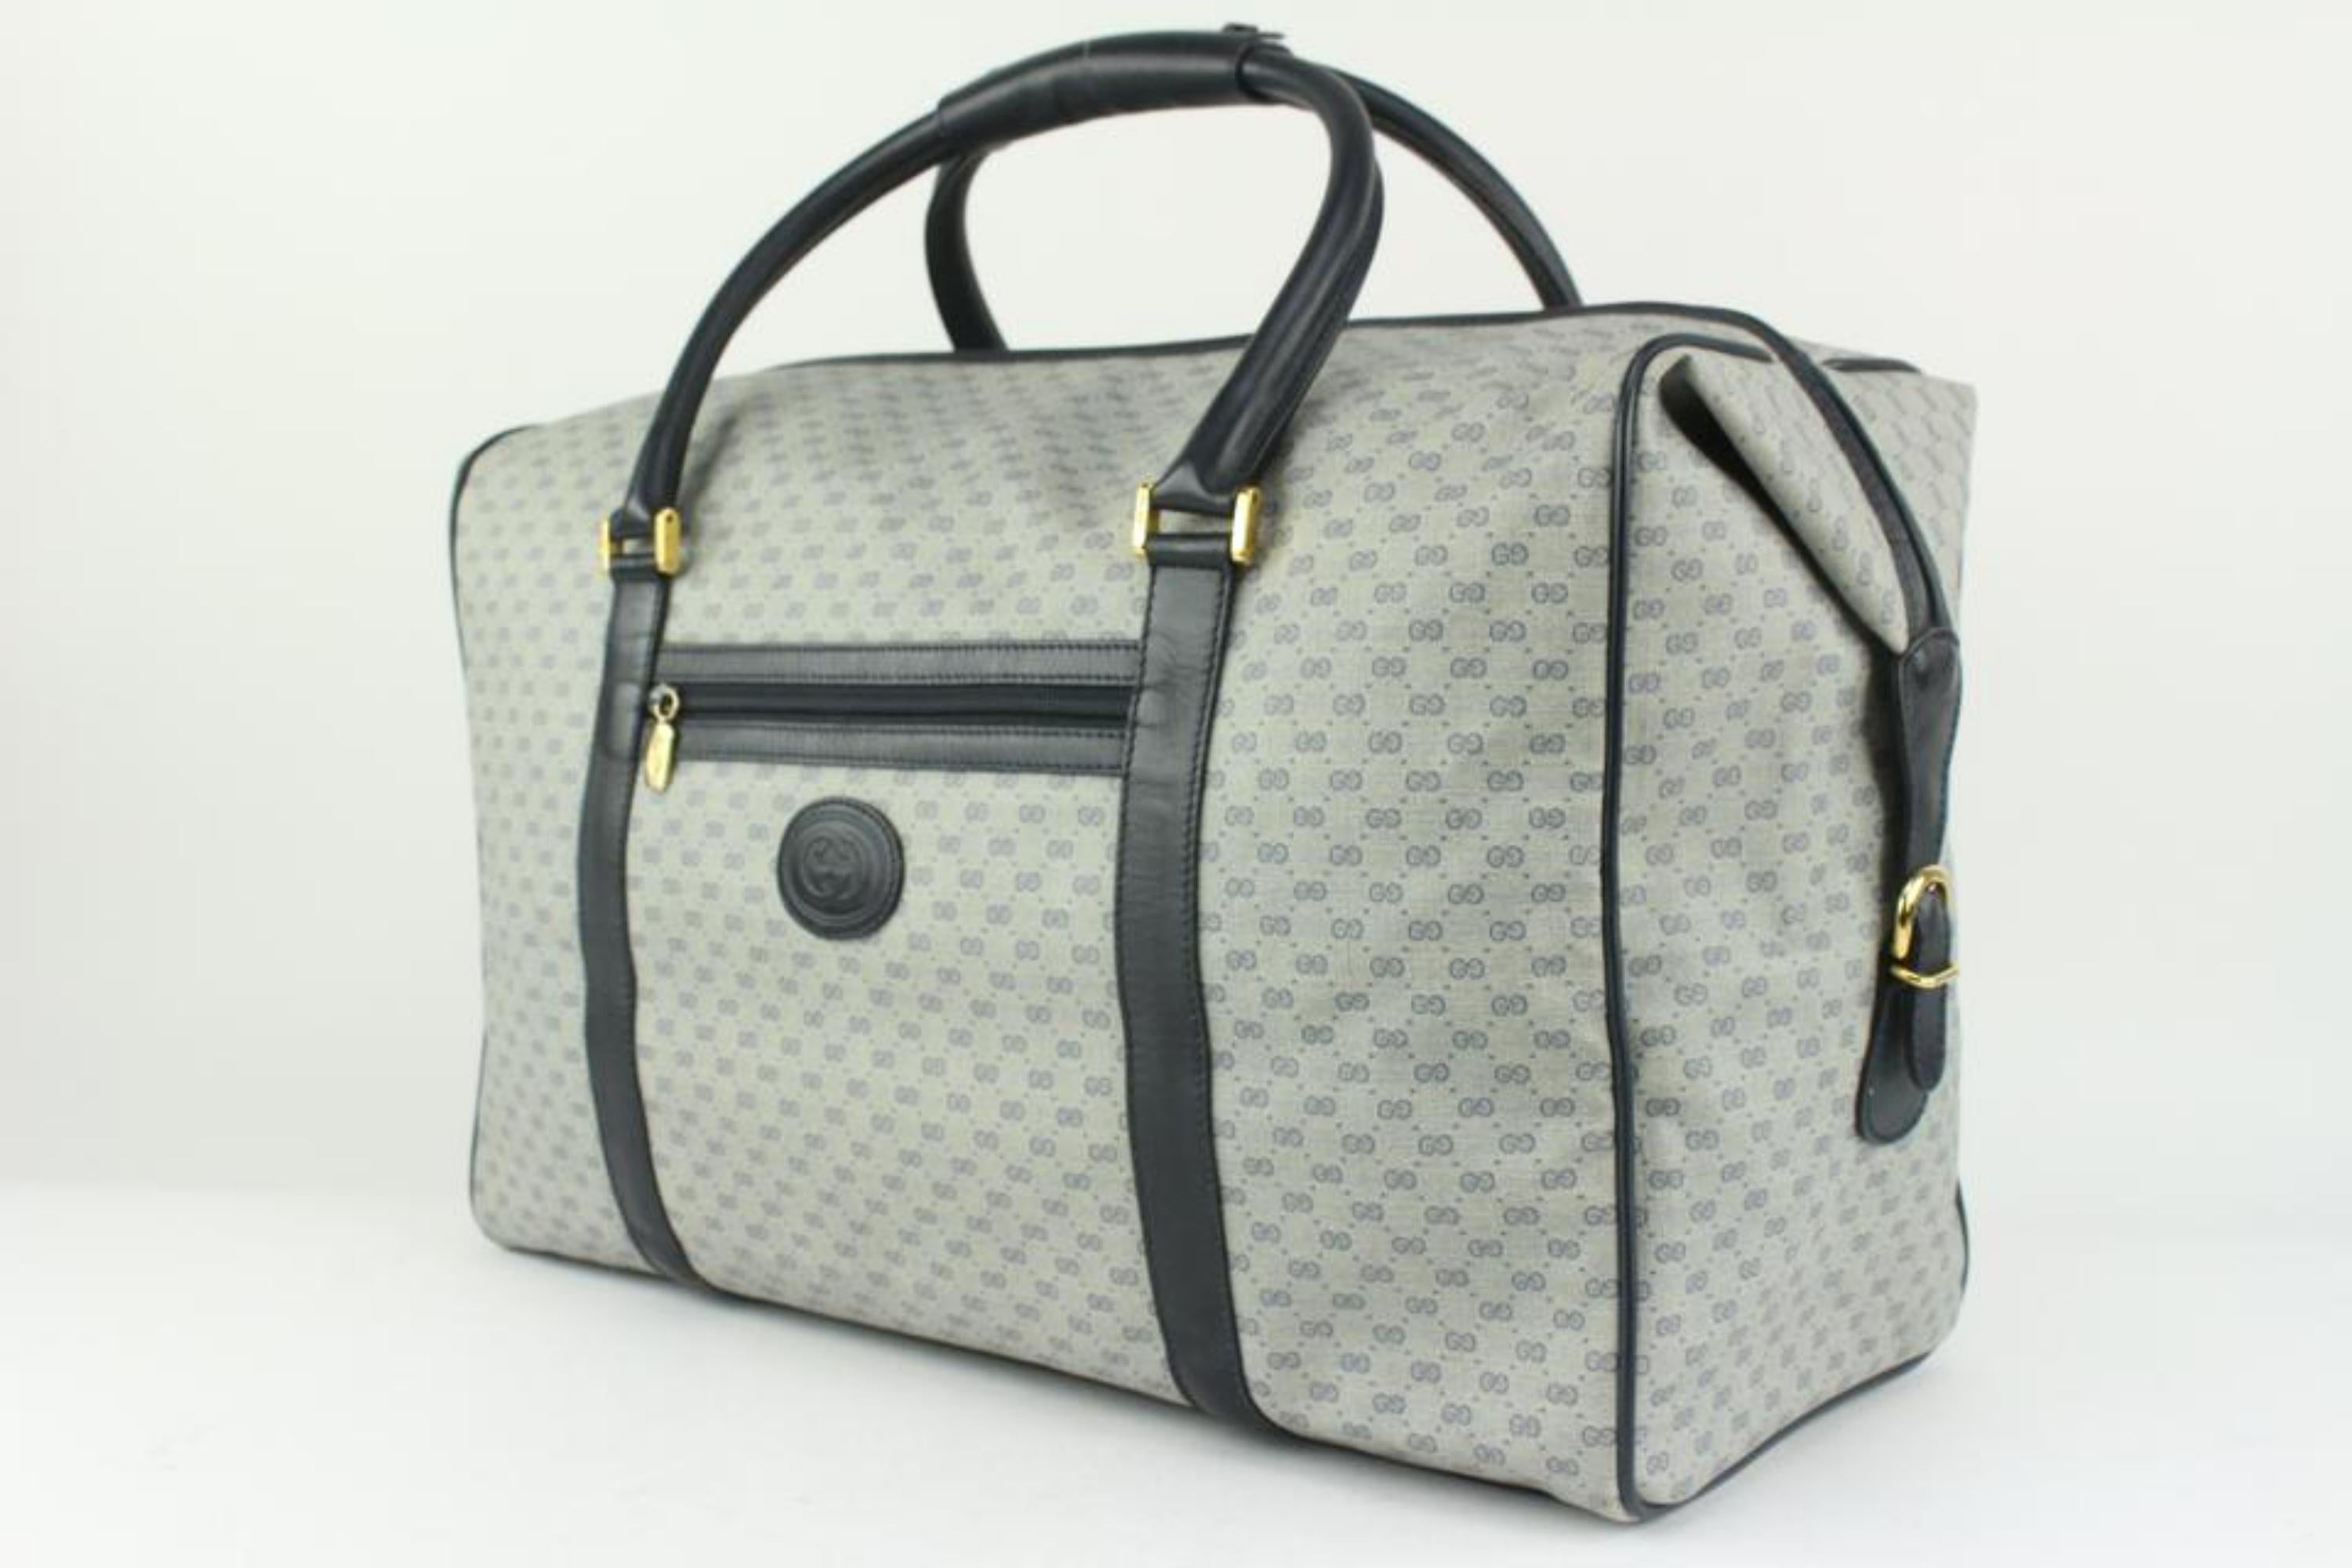 Gucci Navy Micro GG Monogram Carry On Duffle Bag 1118g32 7